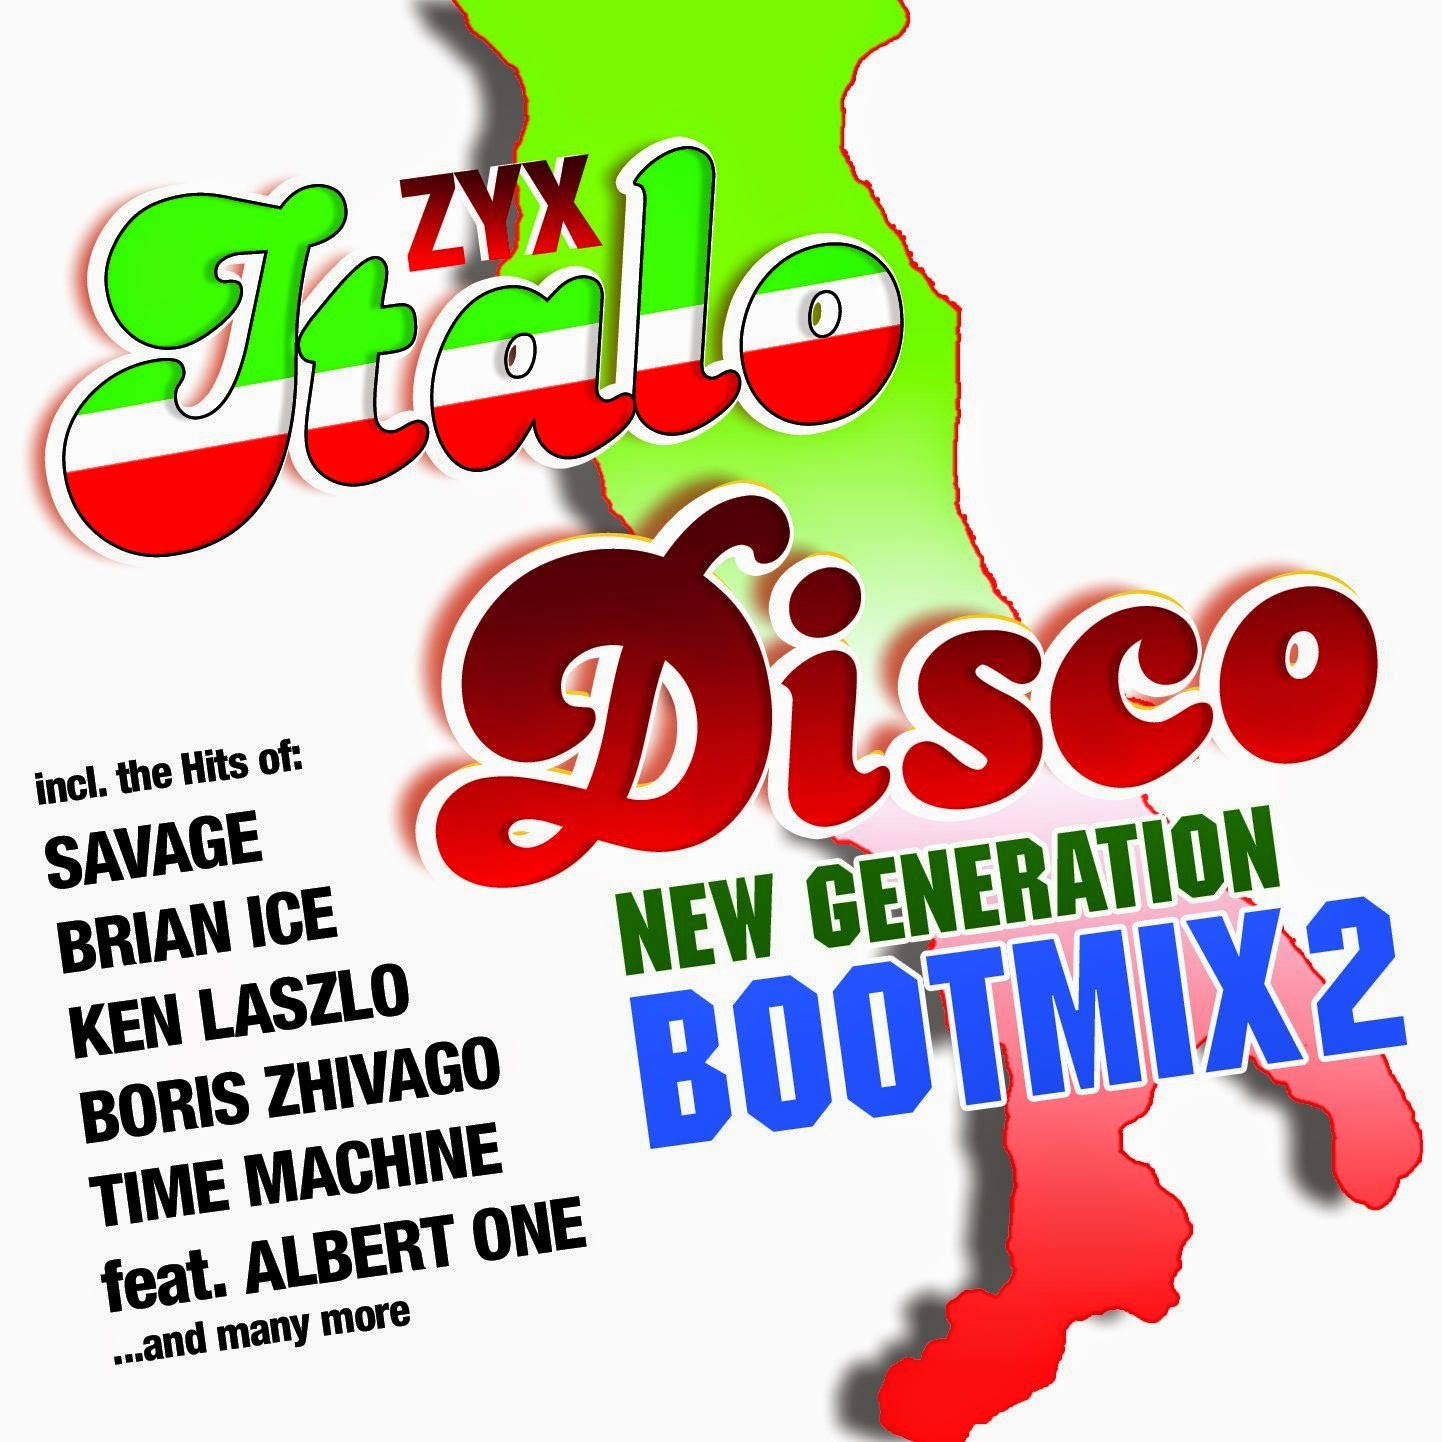 zyx italo disco new generation bootmix 2-CD